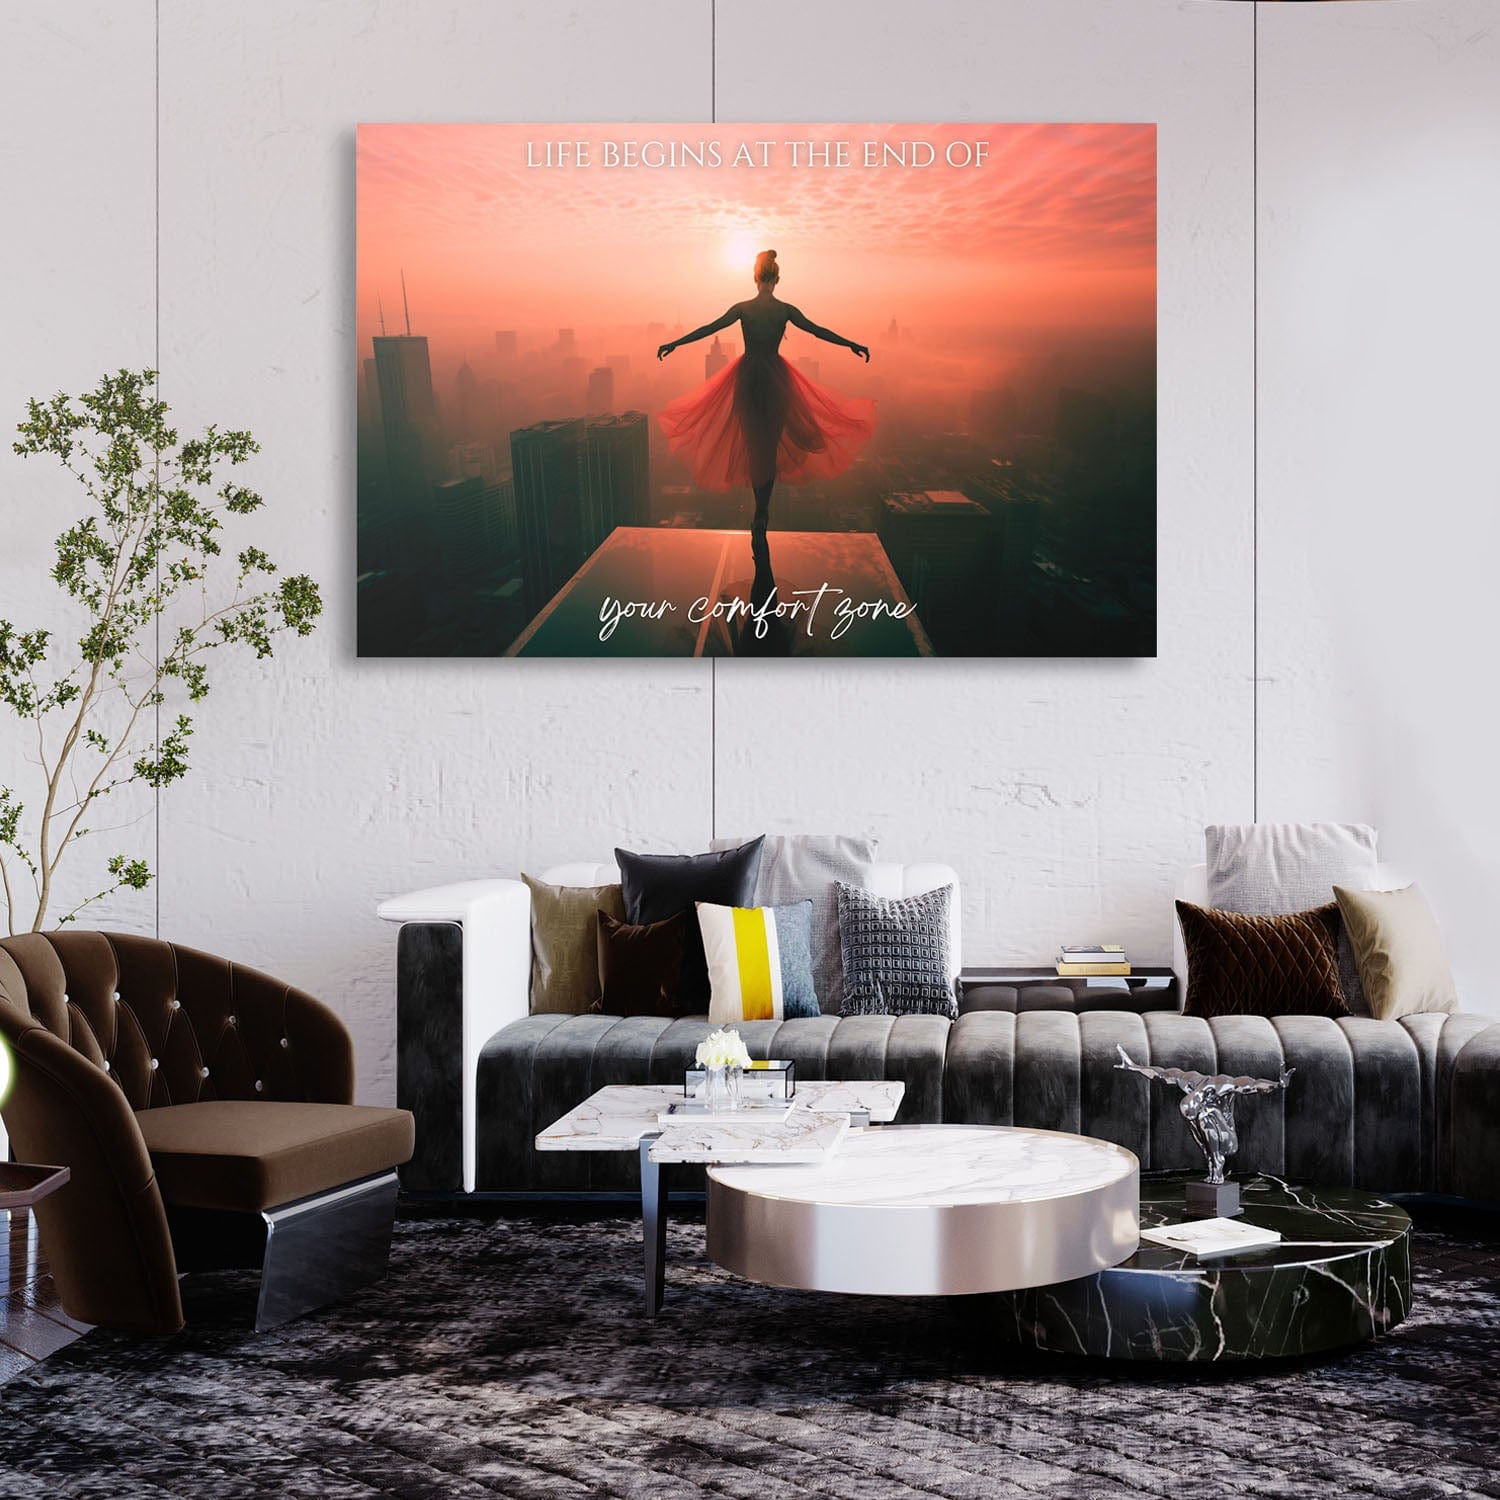 Ballet Dancer Edge - Life begins at the end of your comfort zone Wall Art | Inspirational Wall Art Motivational Wall Art Quotes Office Art | ImpaktMaker Exclusive Canvas Art Landscape